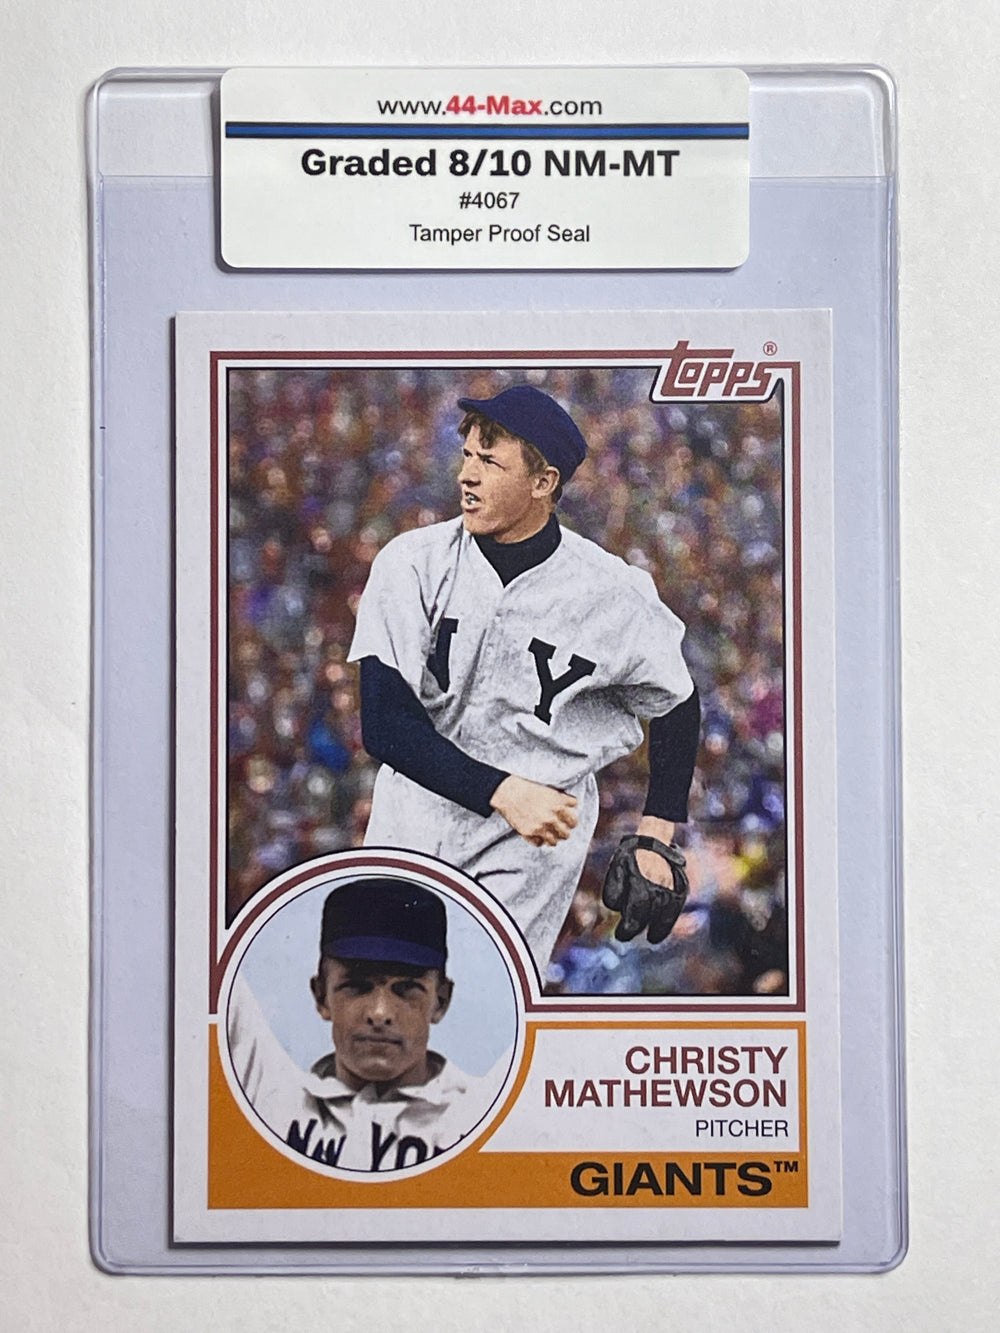 Christy Mathewson 2021 Topps Baseball Card. 44-Max 8/10 NM-MT #4067